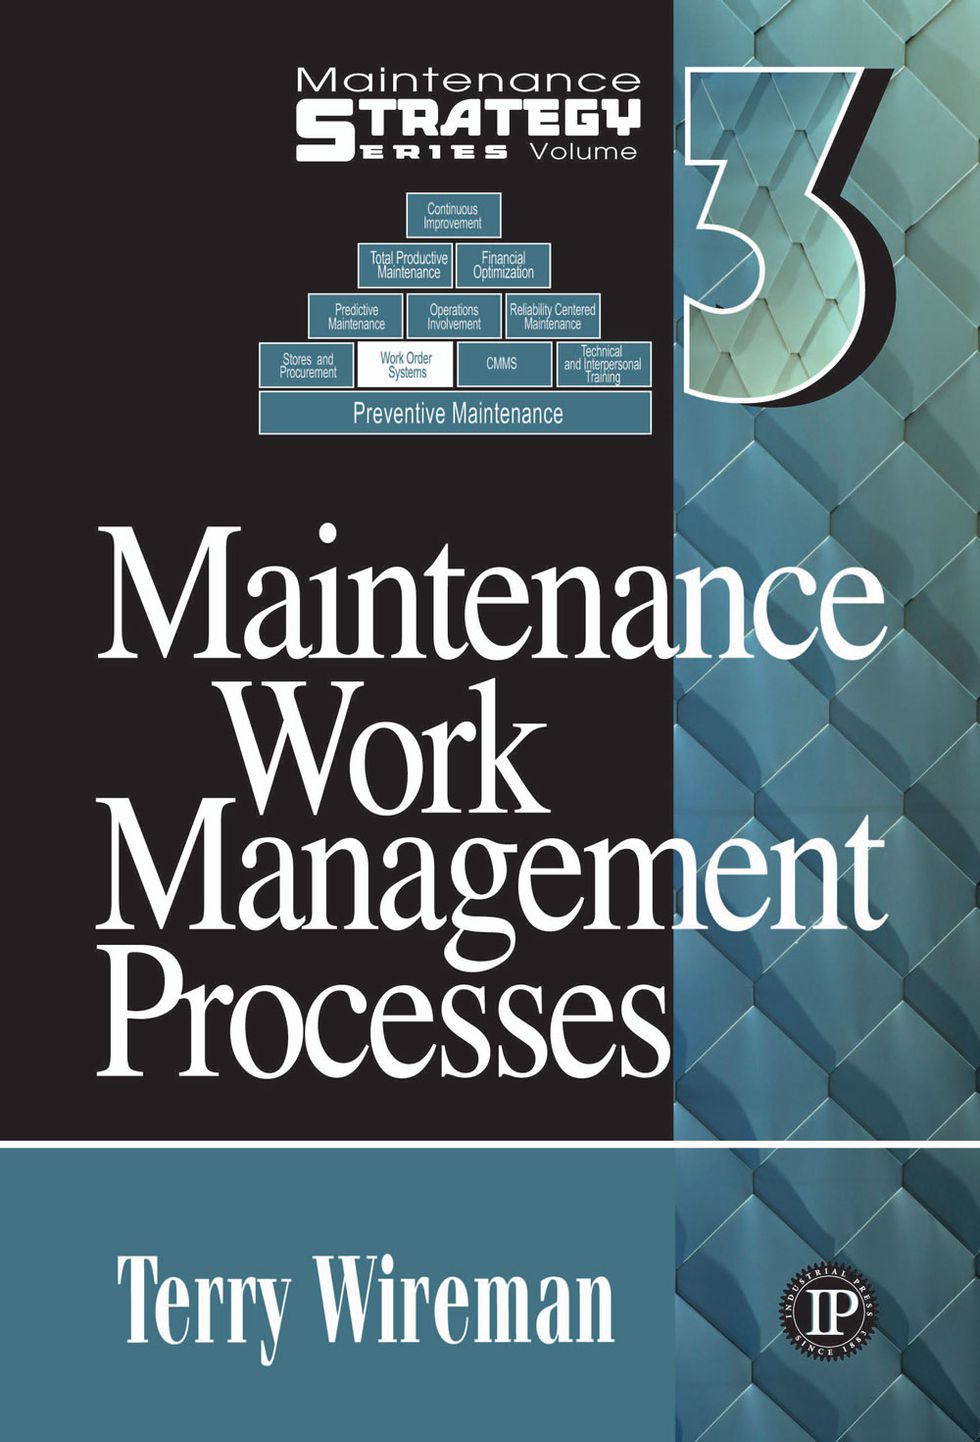  Maintenance Strategy Series Volume 3 - Maintenance Work Management Processes 